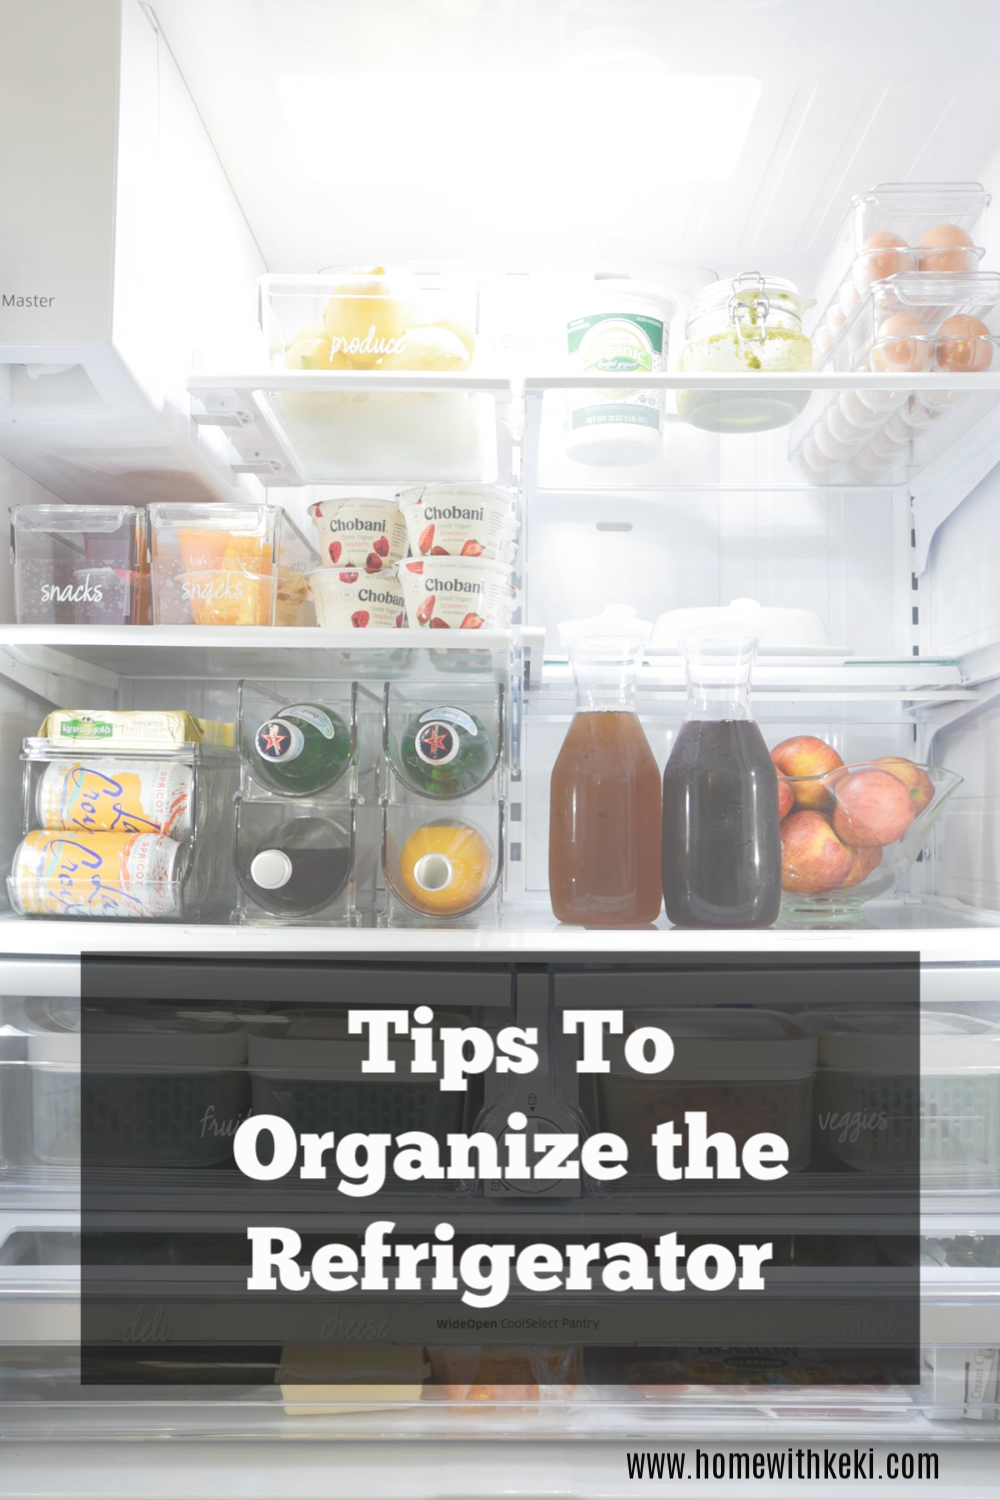 A few quick tips to organize the refrigerator @homewithkeki #organization #kitchenorganization #organizationtips